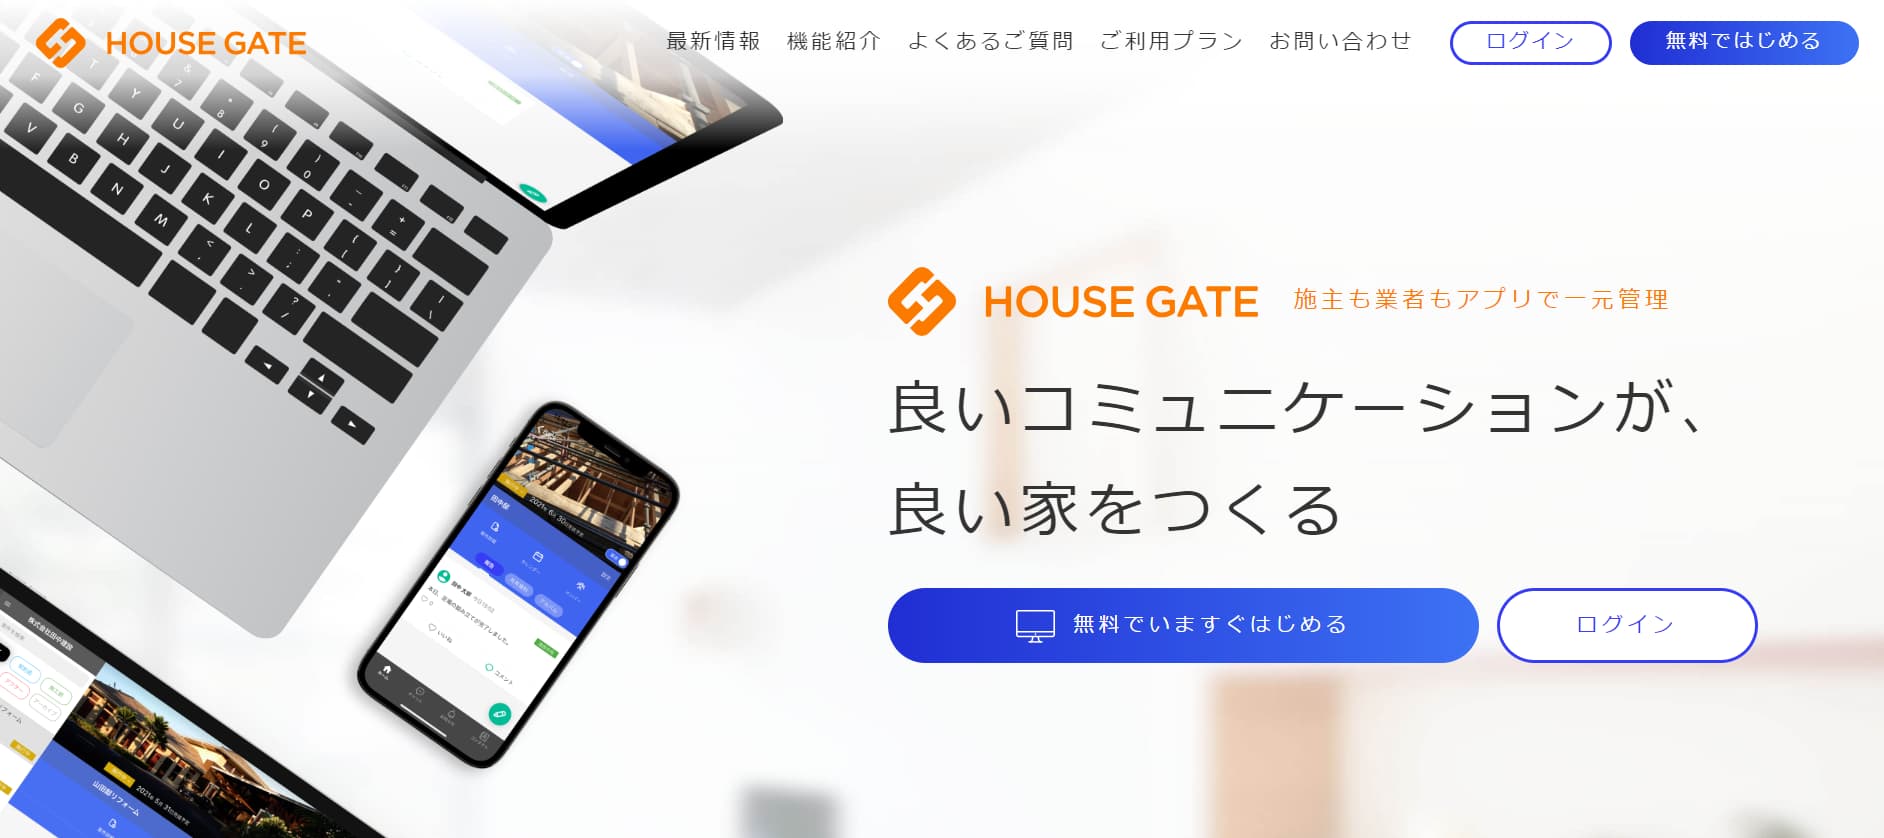 HOUSE GATE